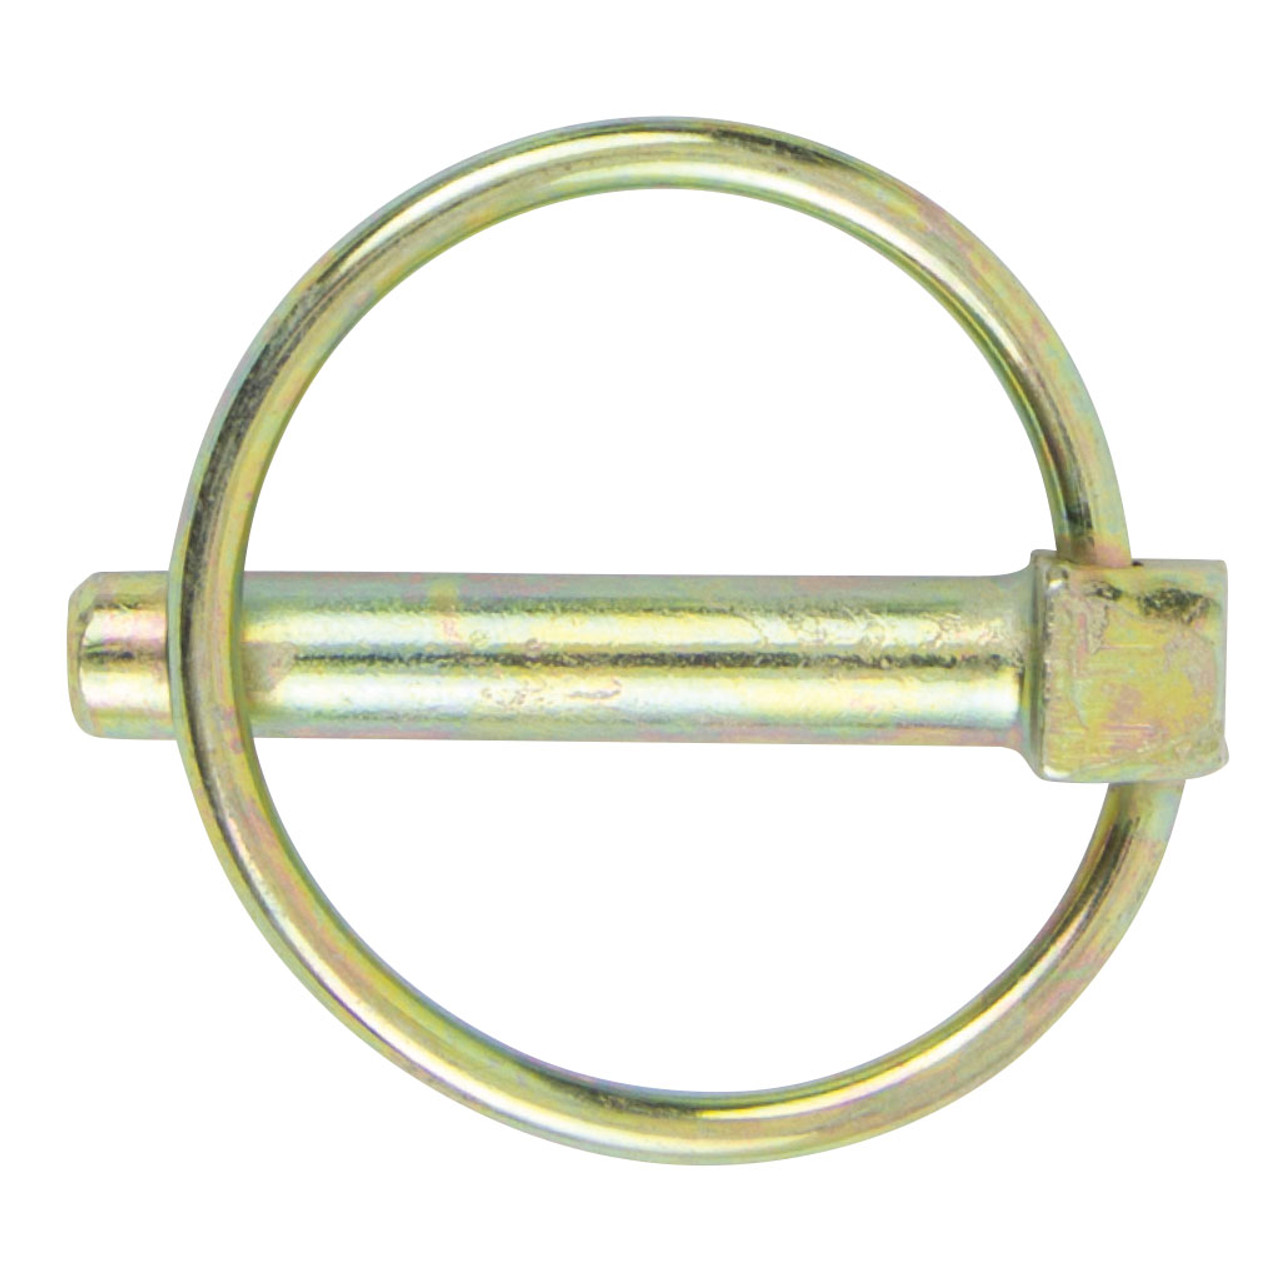 3/16 x 1-1/4 Lynch Pin, Zinc Plated - Hi-Line Inc.